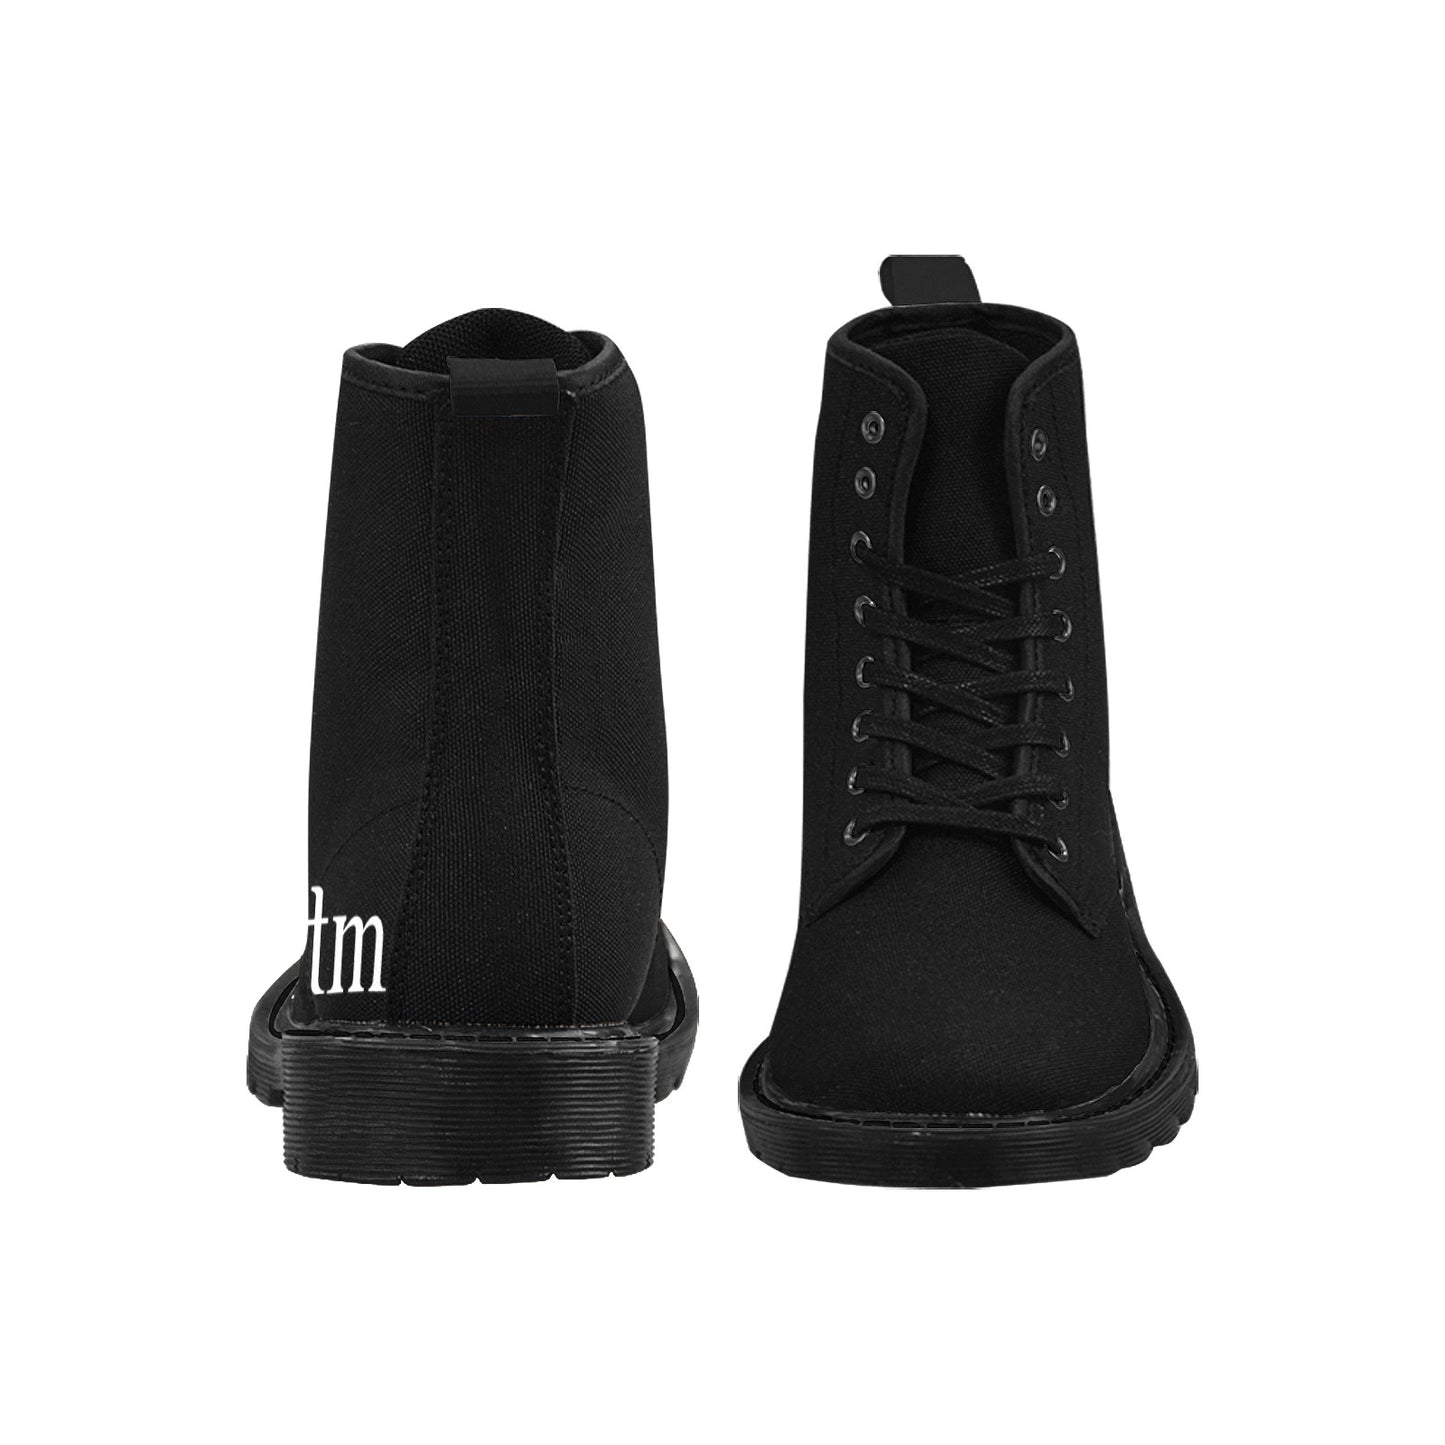 rtm #25 Martin Boots for Men (Black)